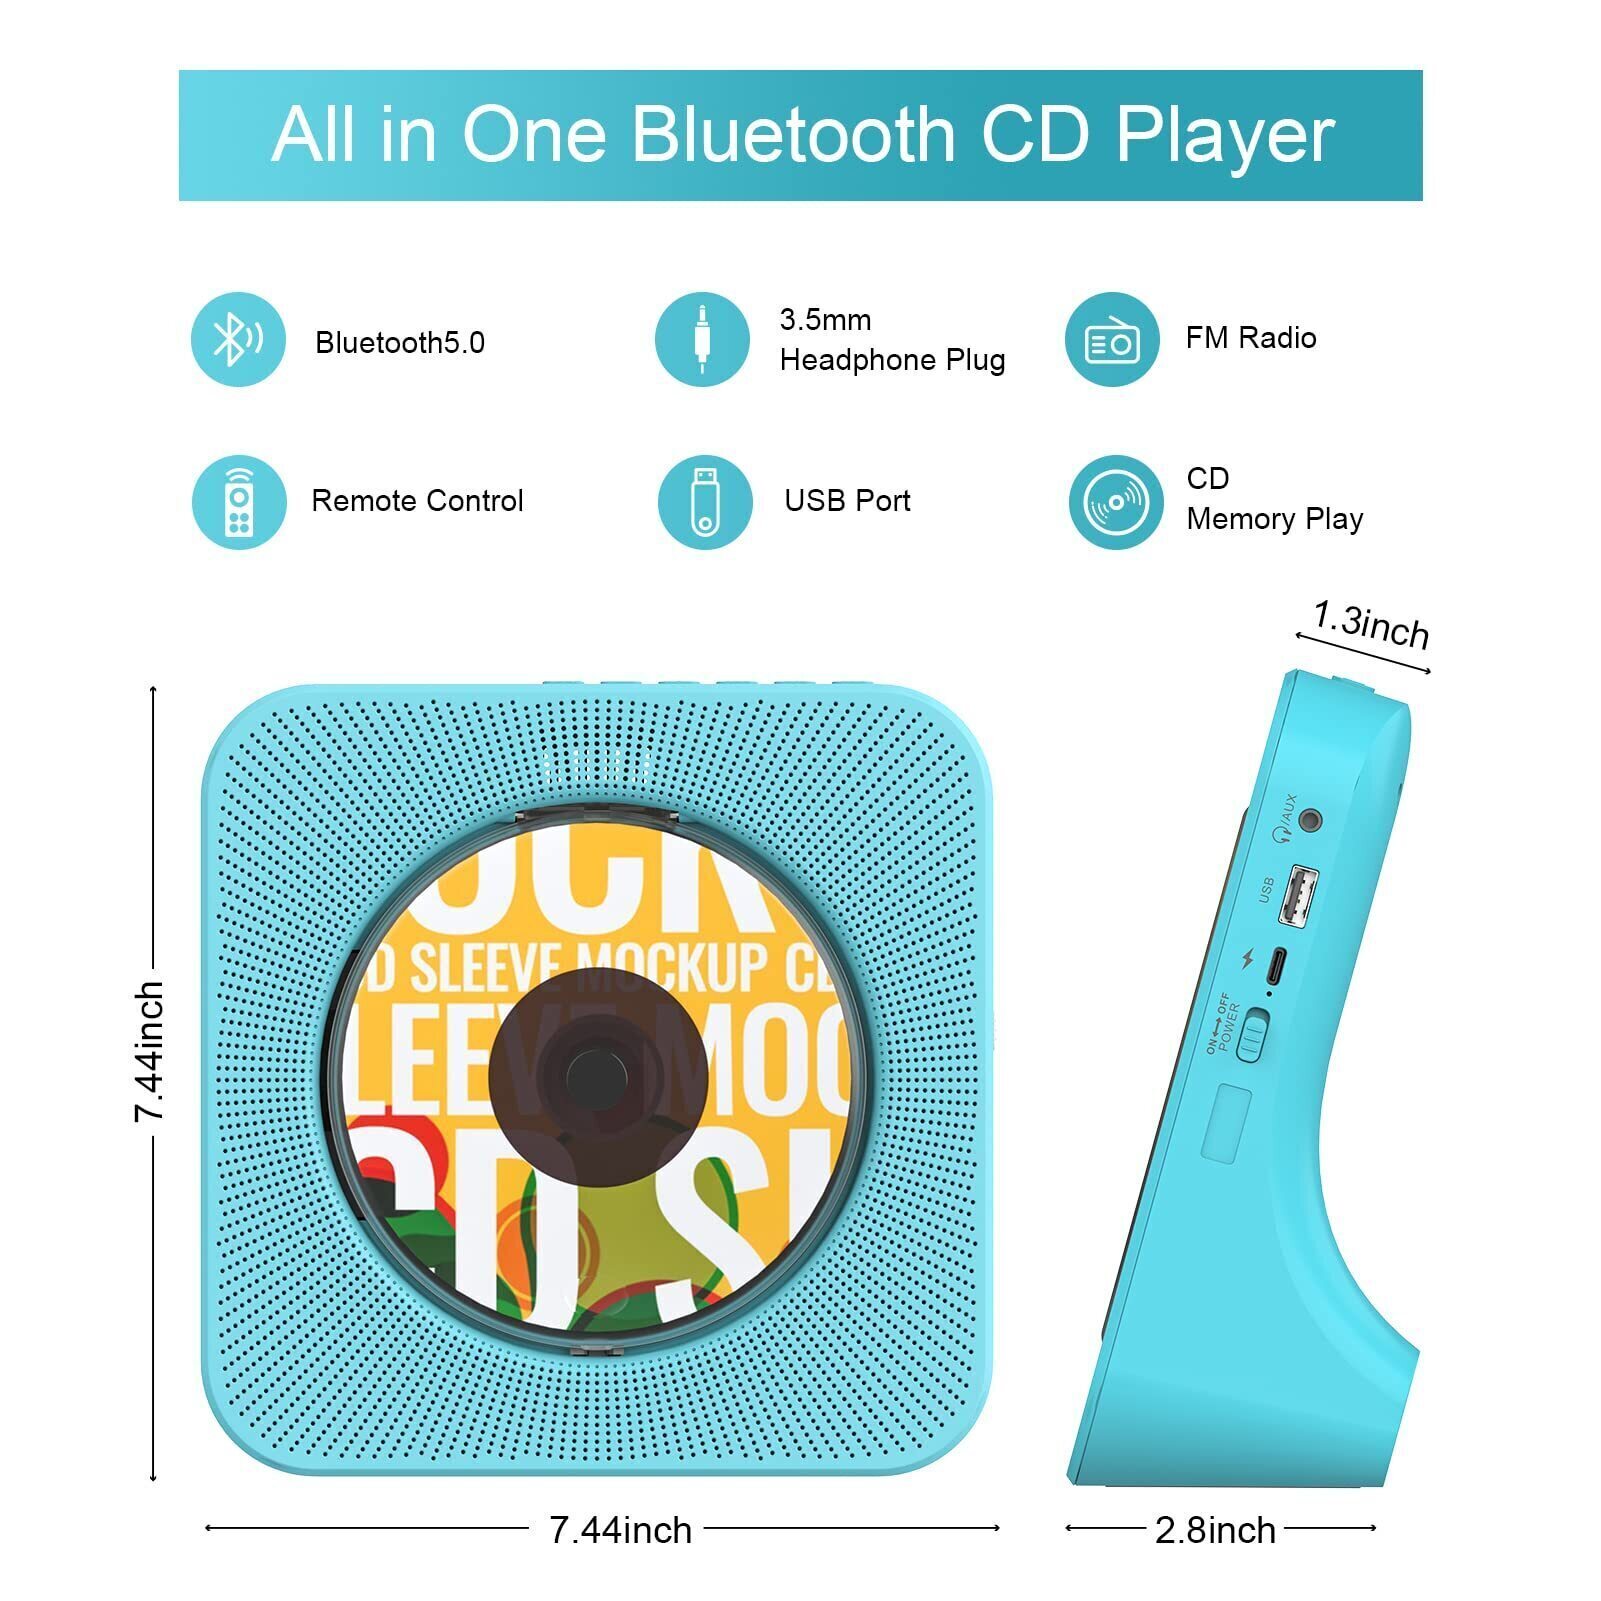 Portable Bluetooth CD Player